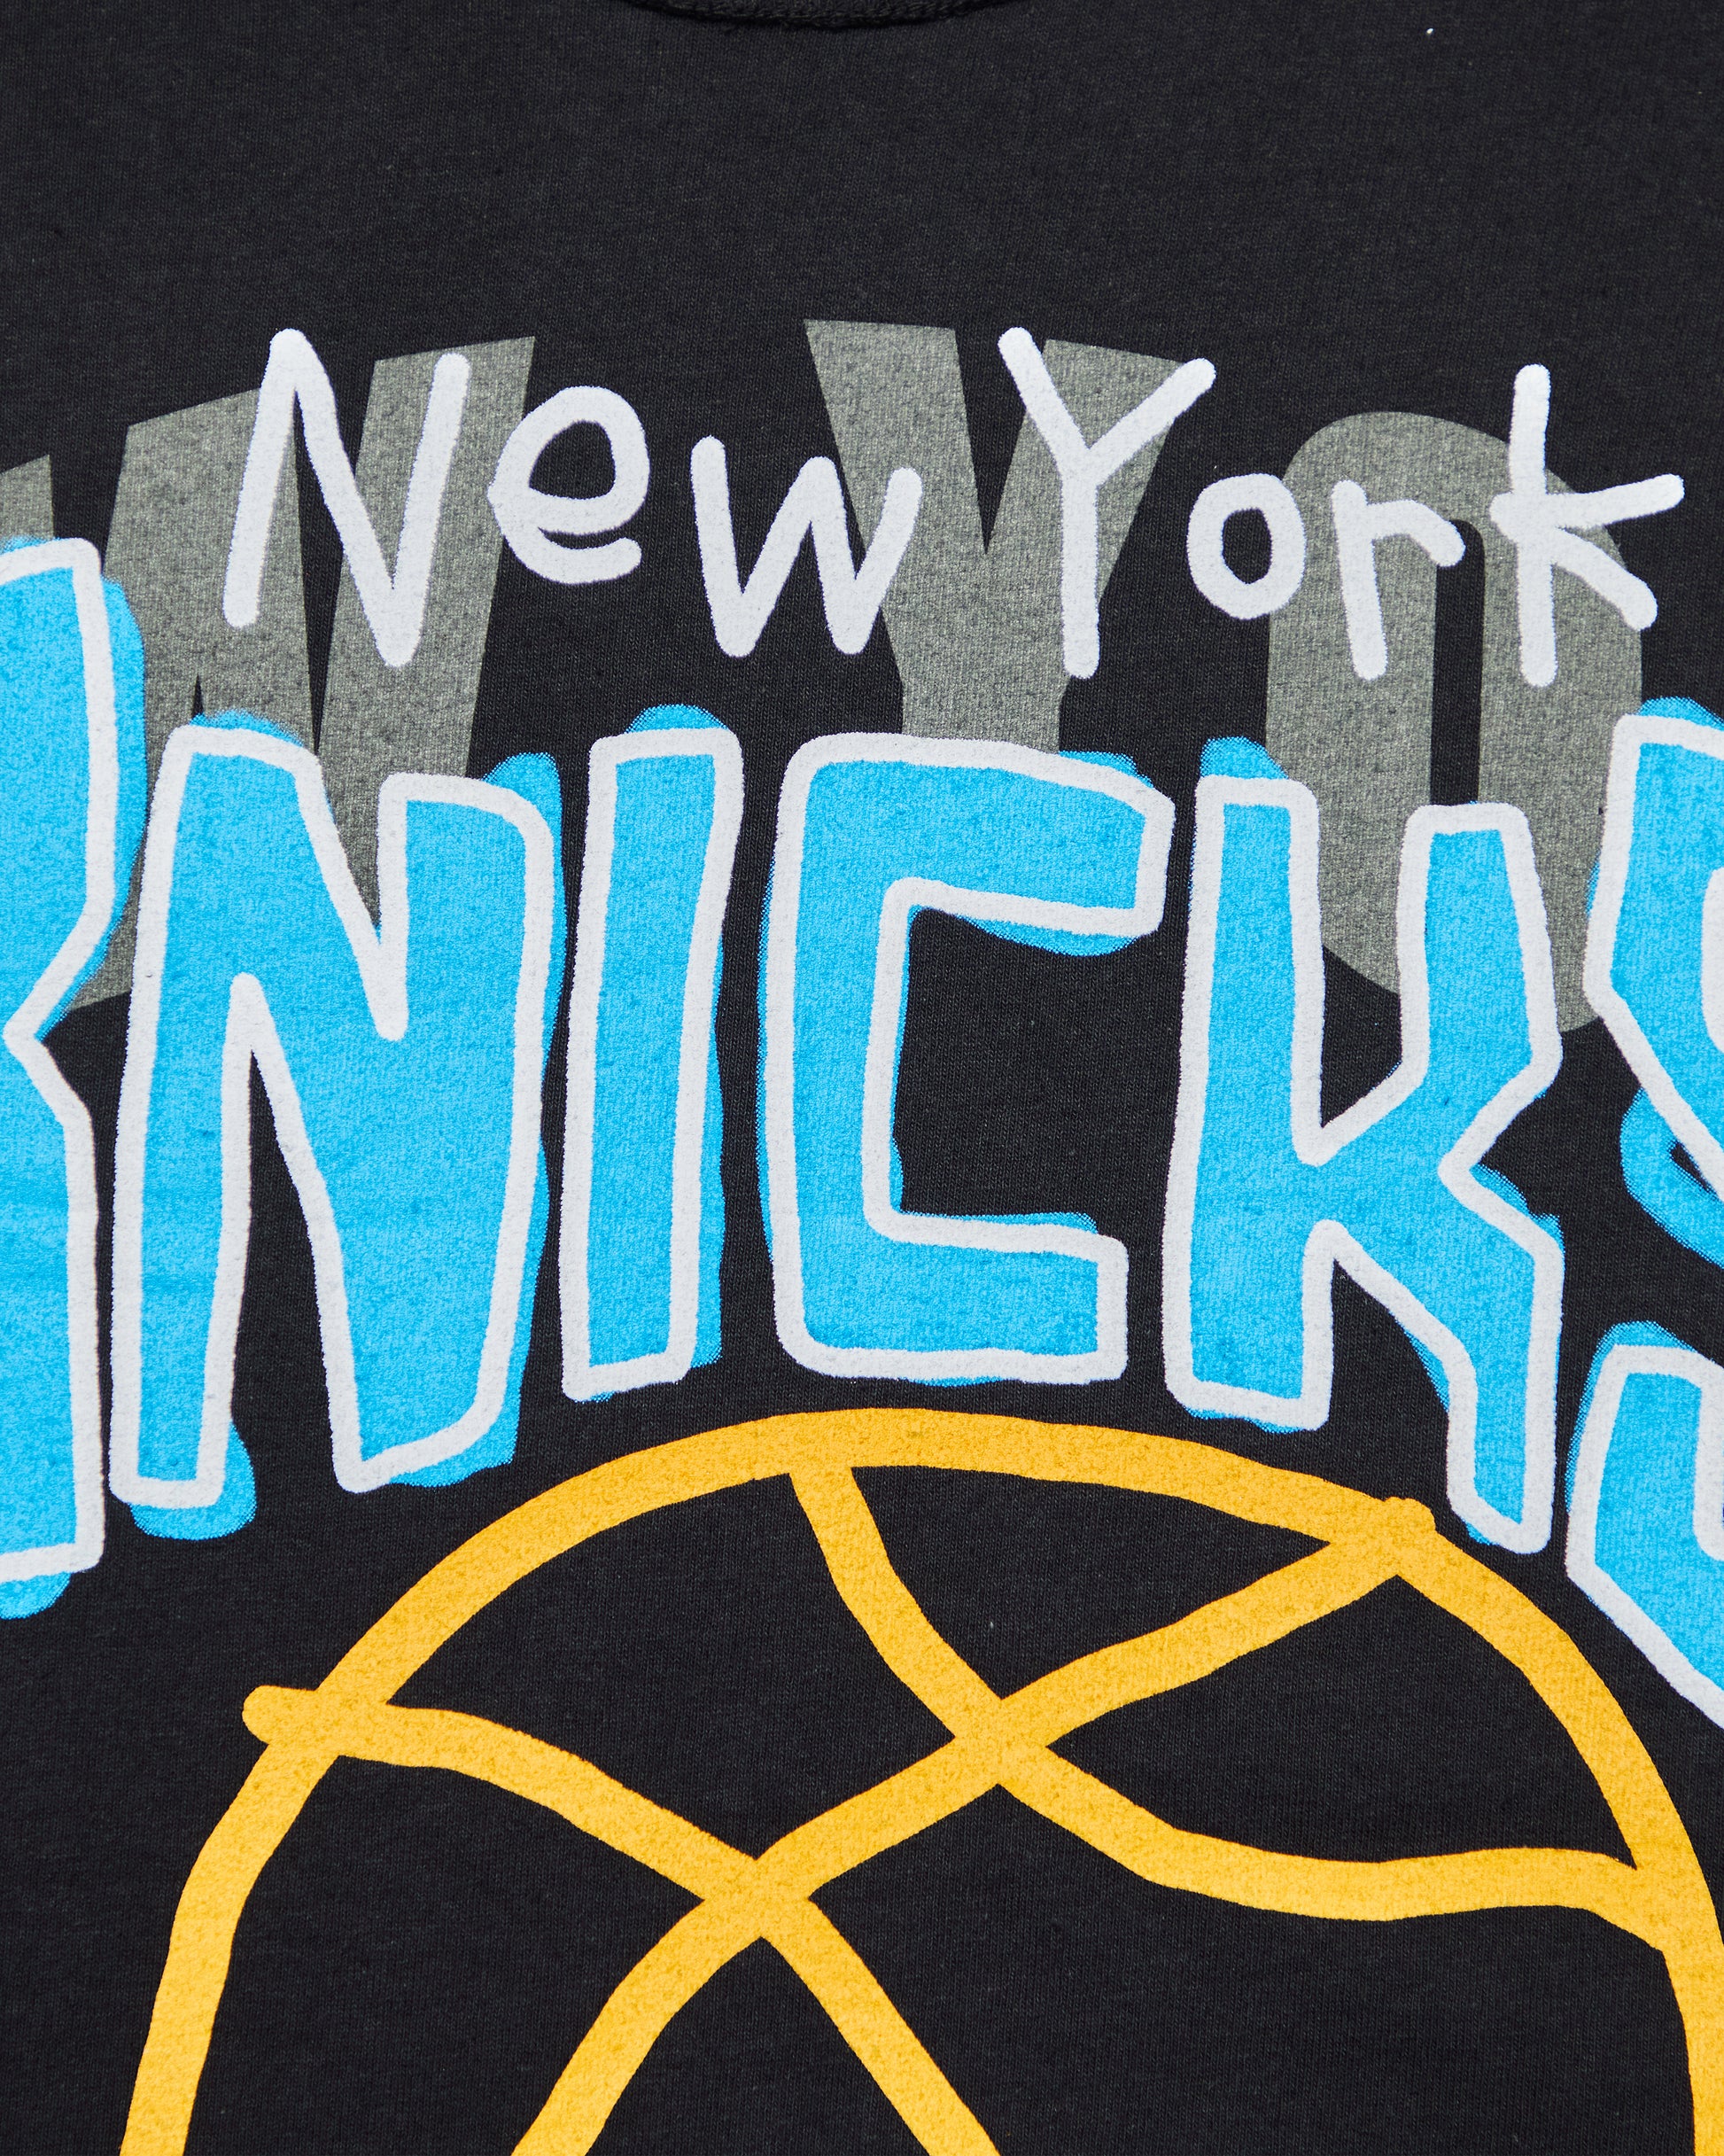 New York Knicks Basketball Bing Bong Shirt - Fashion Trending T-shirt Store